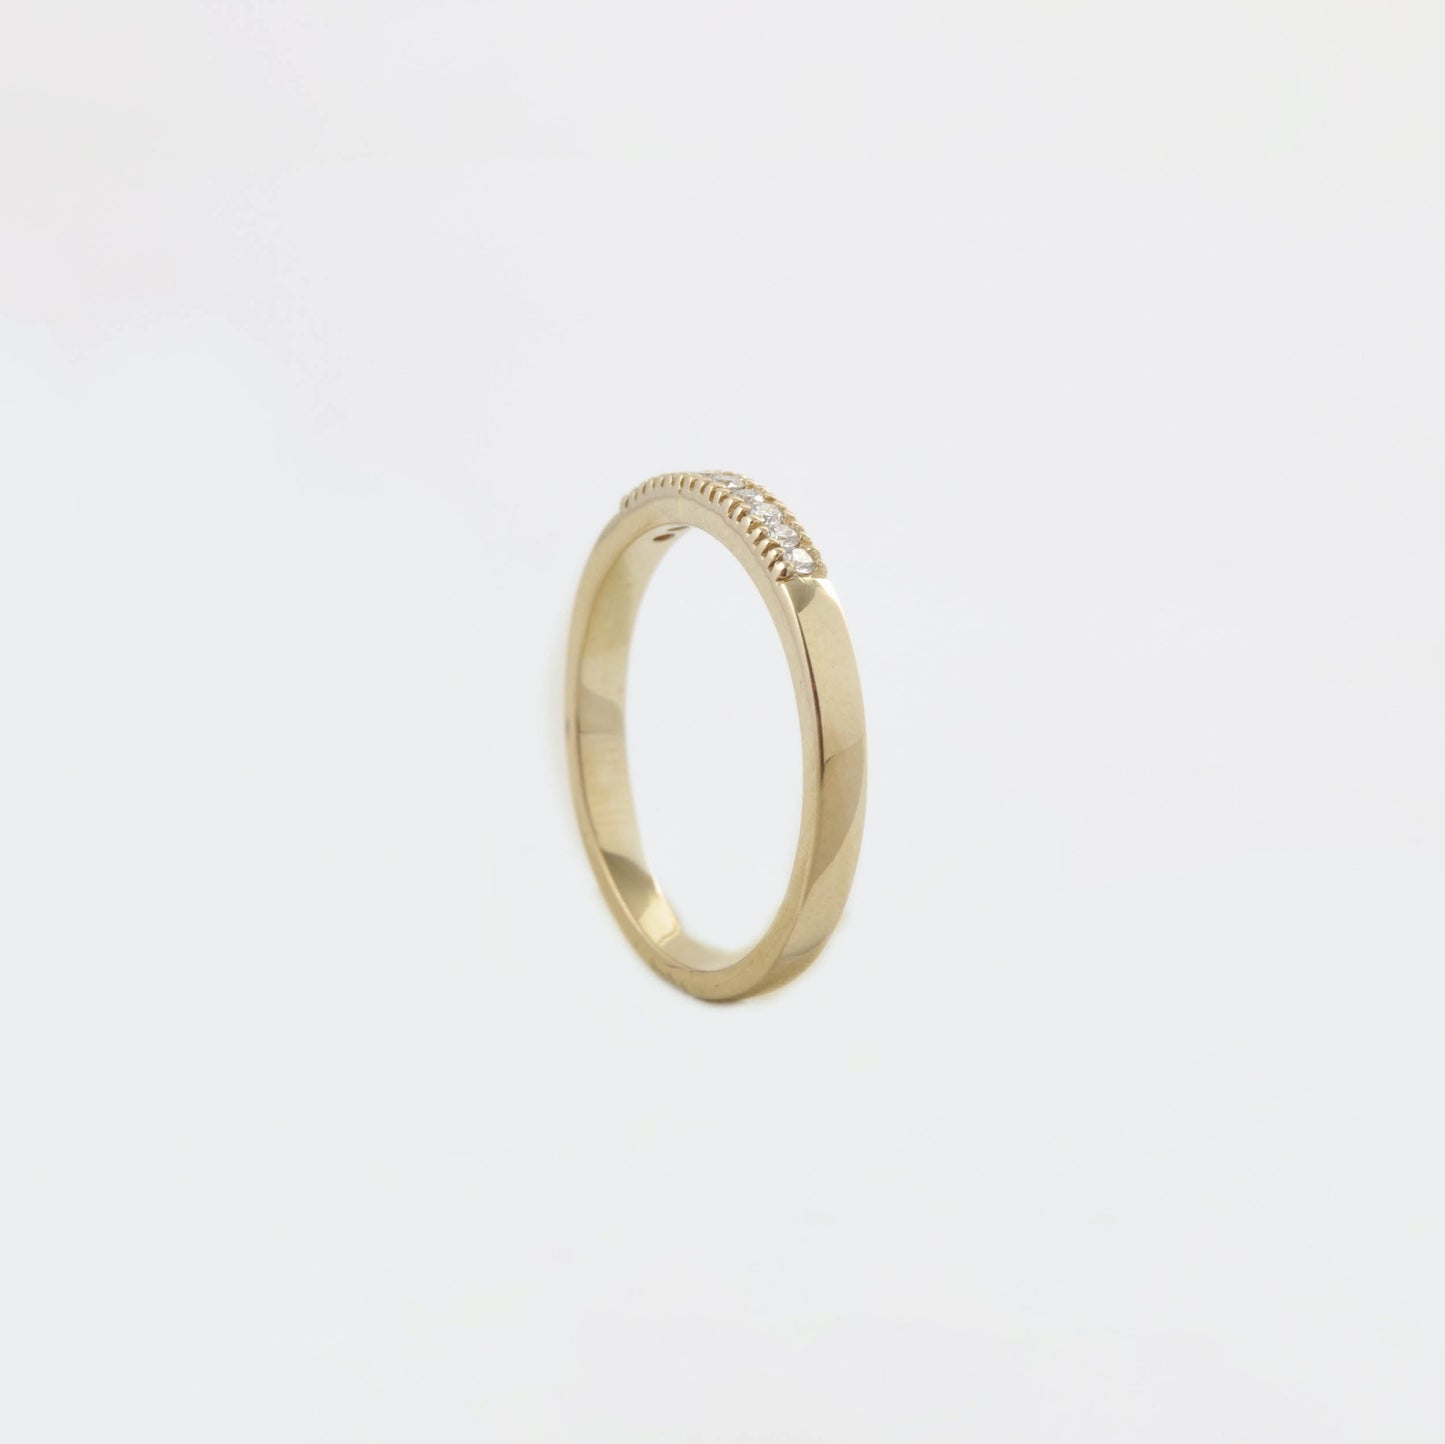 The Damayanti Gold and Diamond Ring by Rasvihar